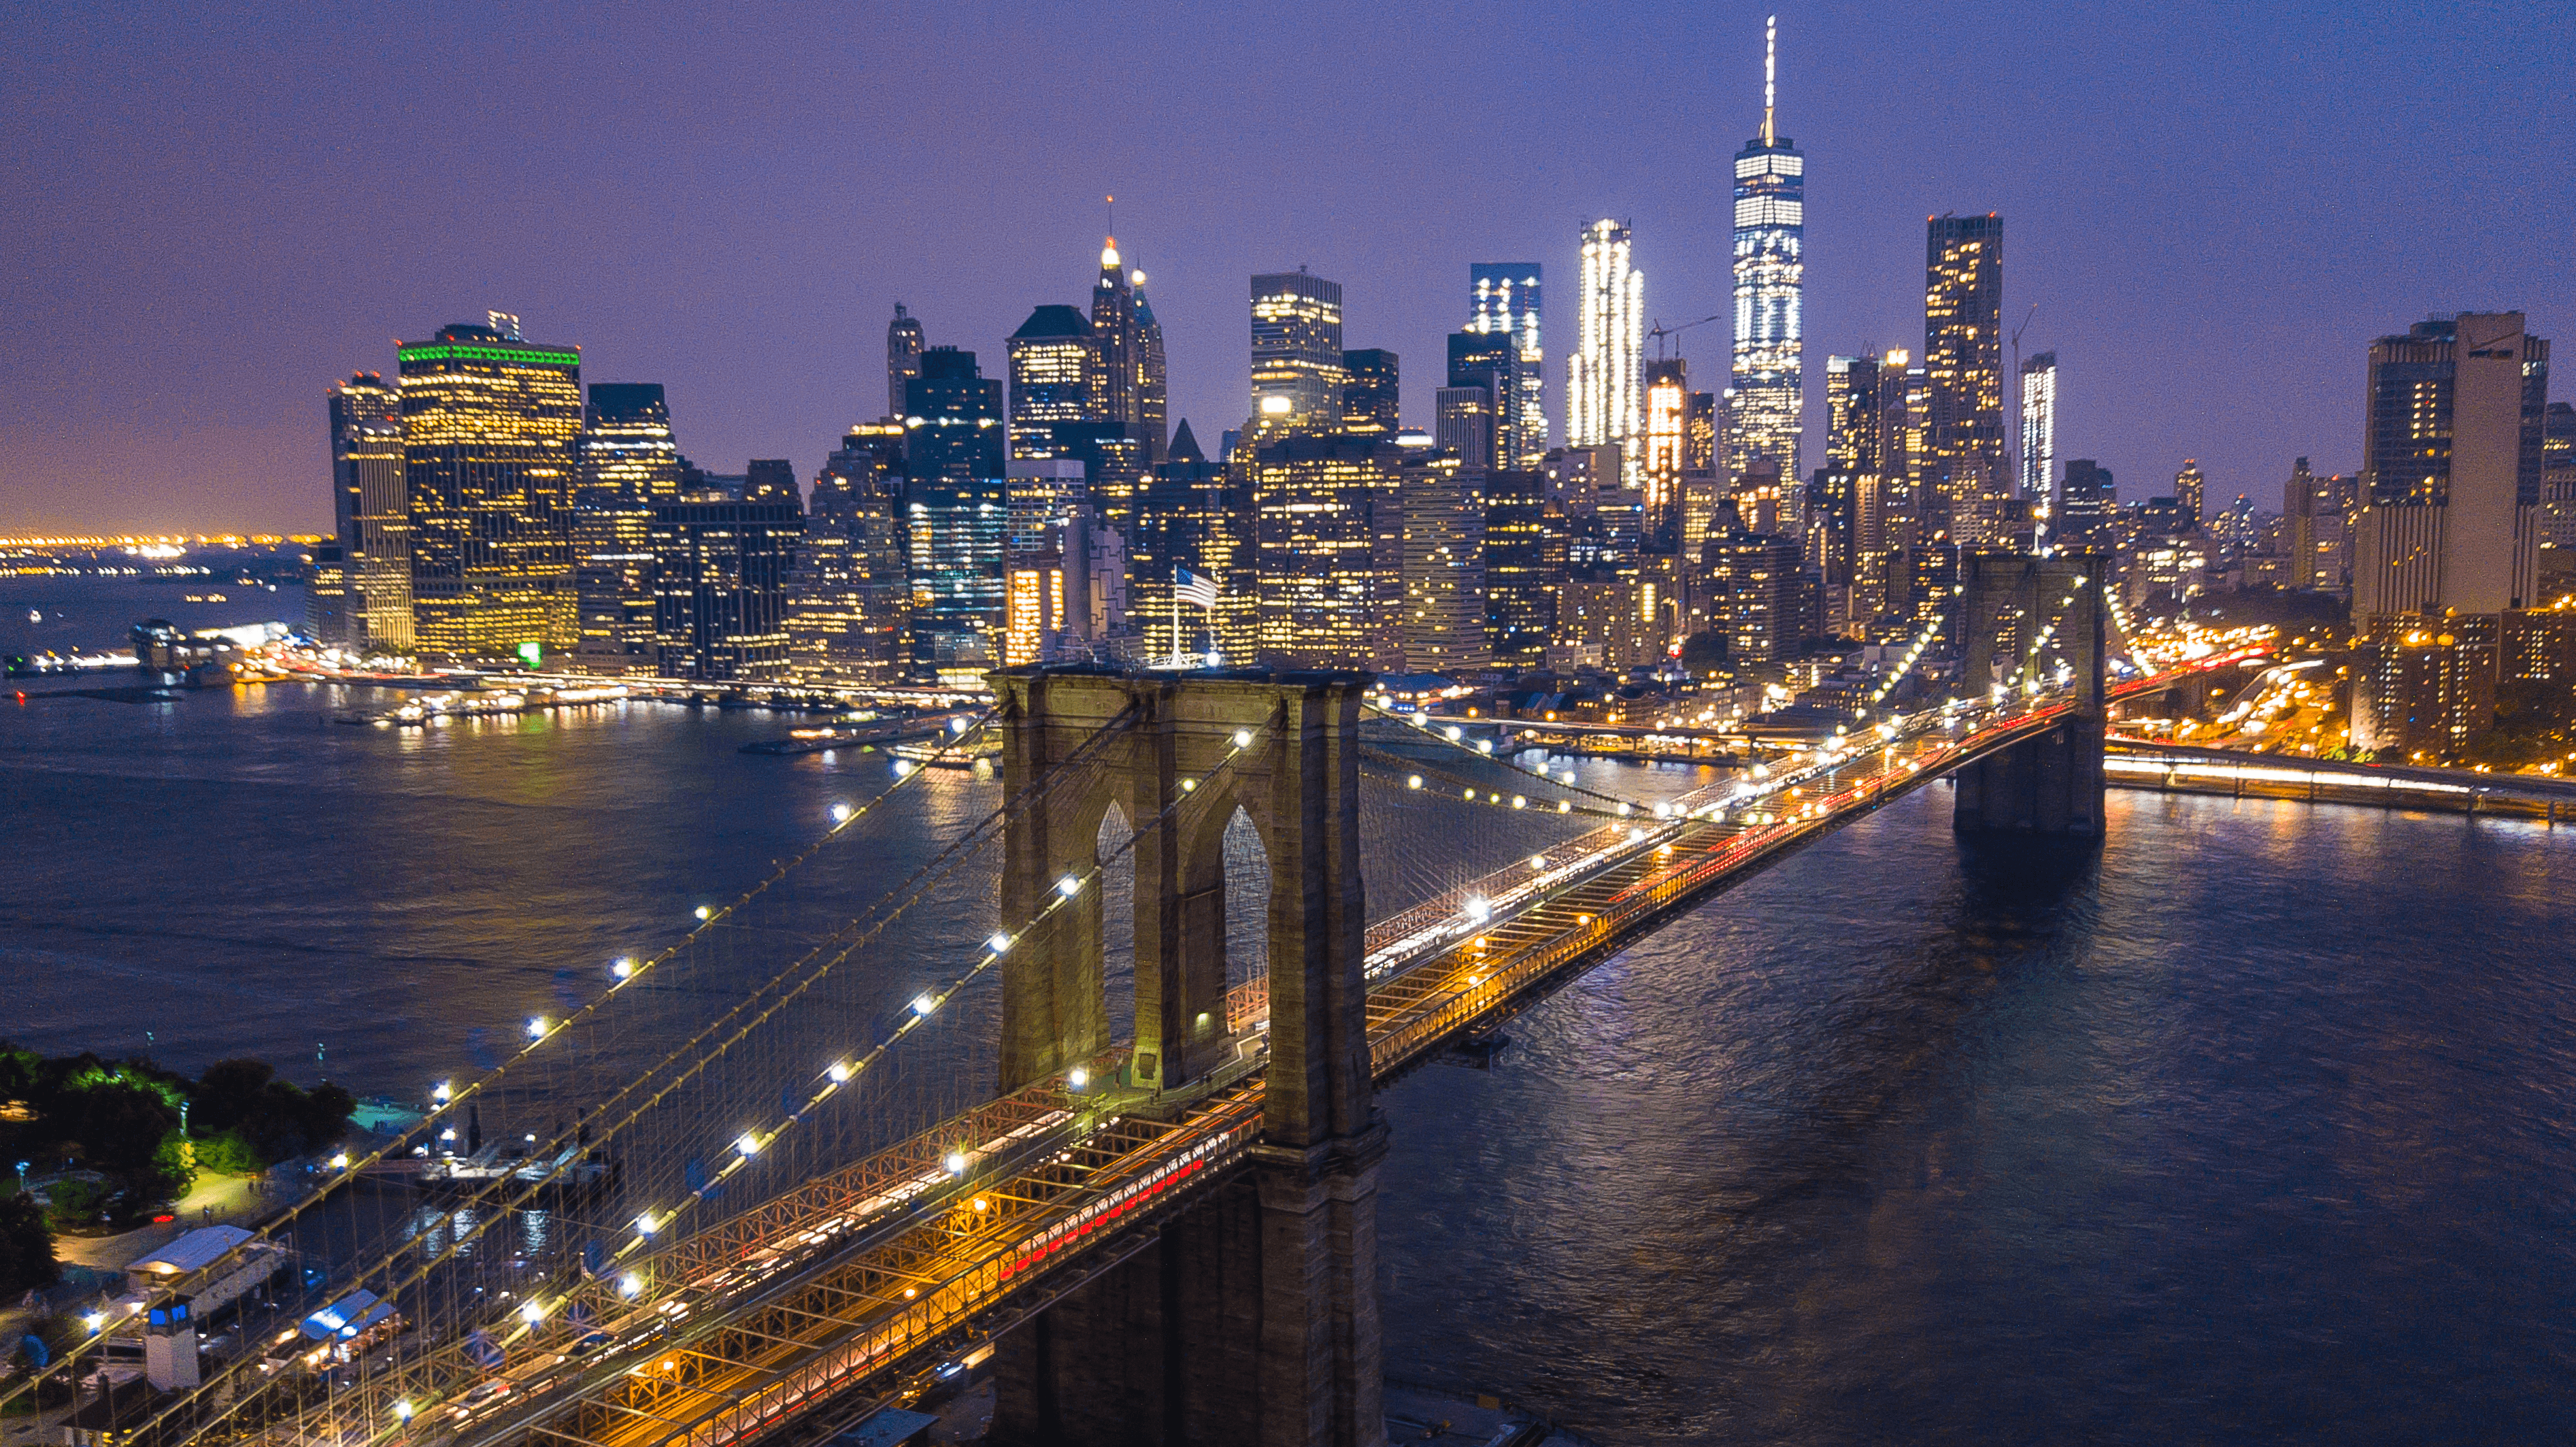 Brooklyn Bridge and Lower Manhattan Skyline